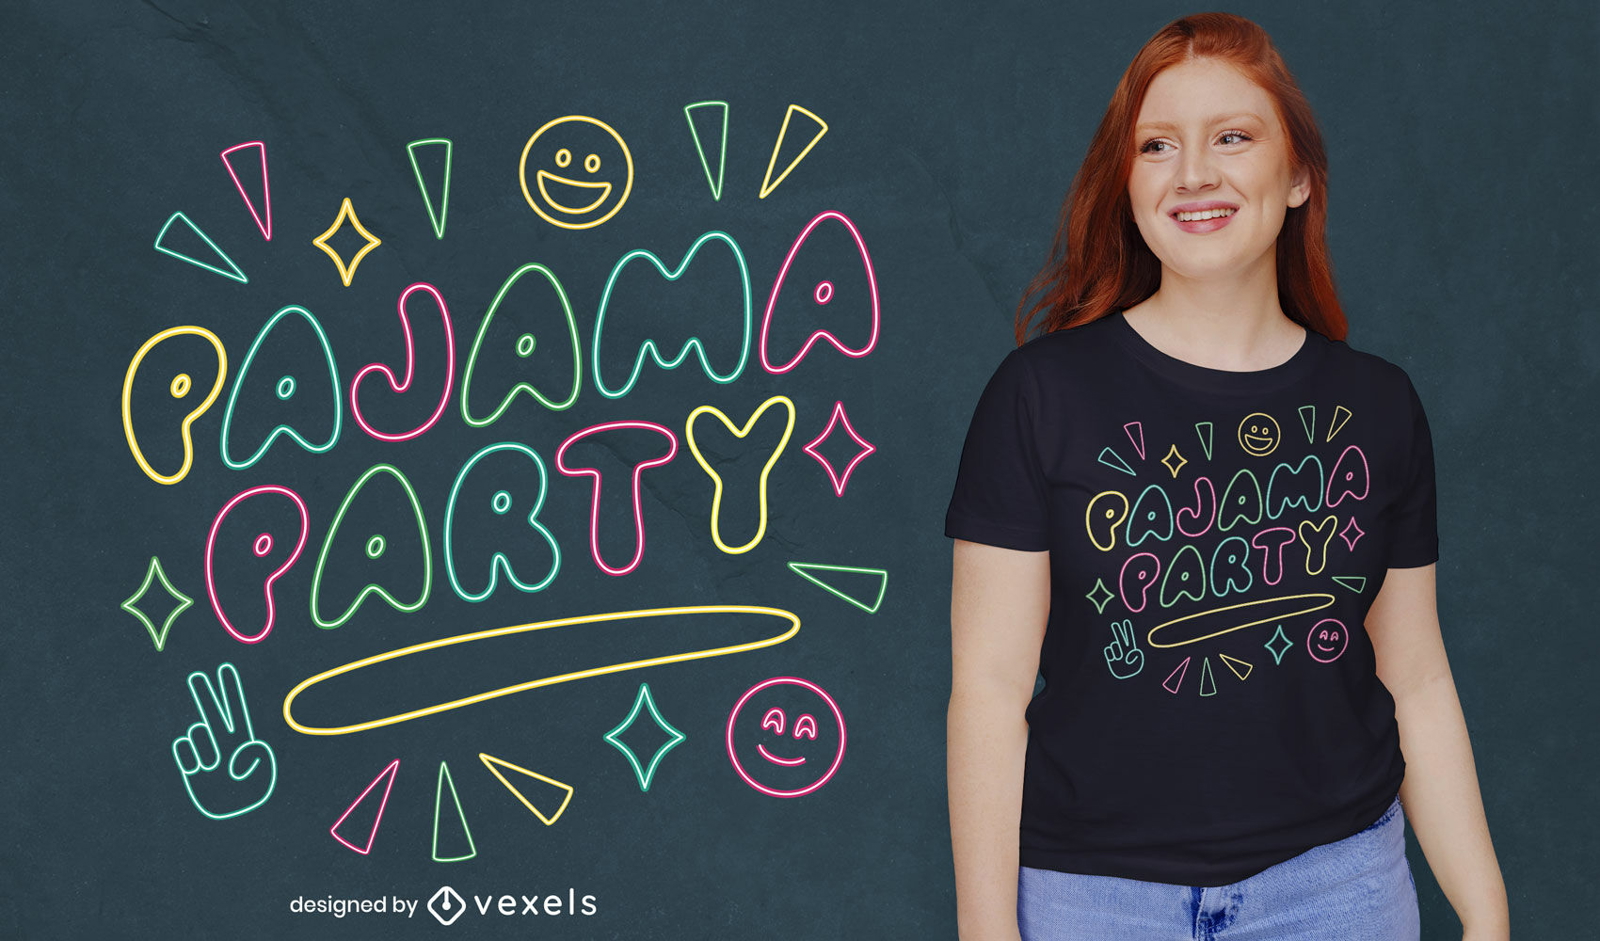 Pajama party neon t-shirt design